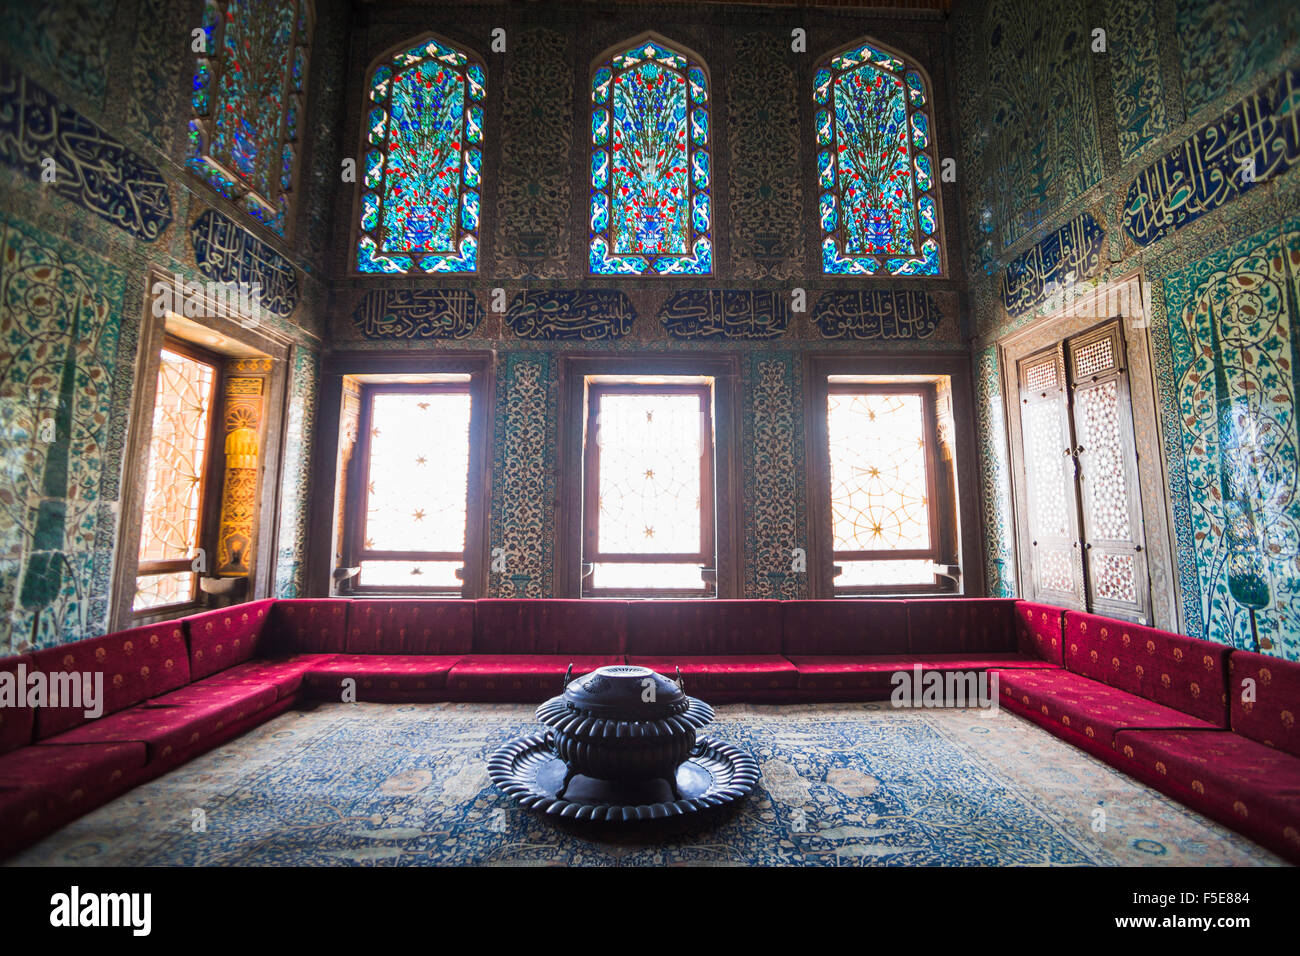 Summerhouse interior at Topkapi Palace, UNESCO World Heritage Site, Istanbul, Turkey, Europe Stock Photo